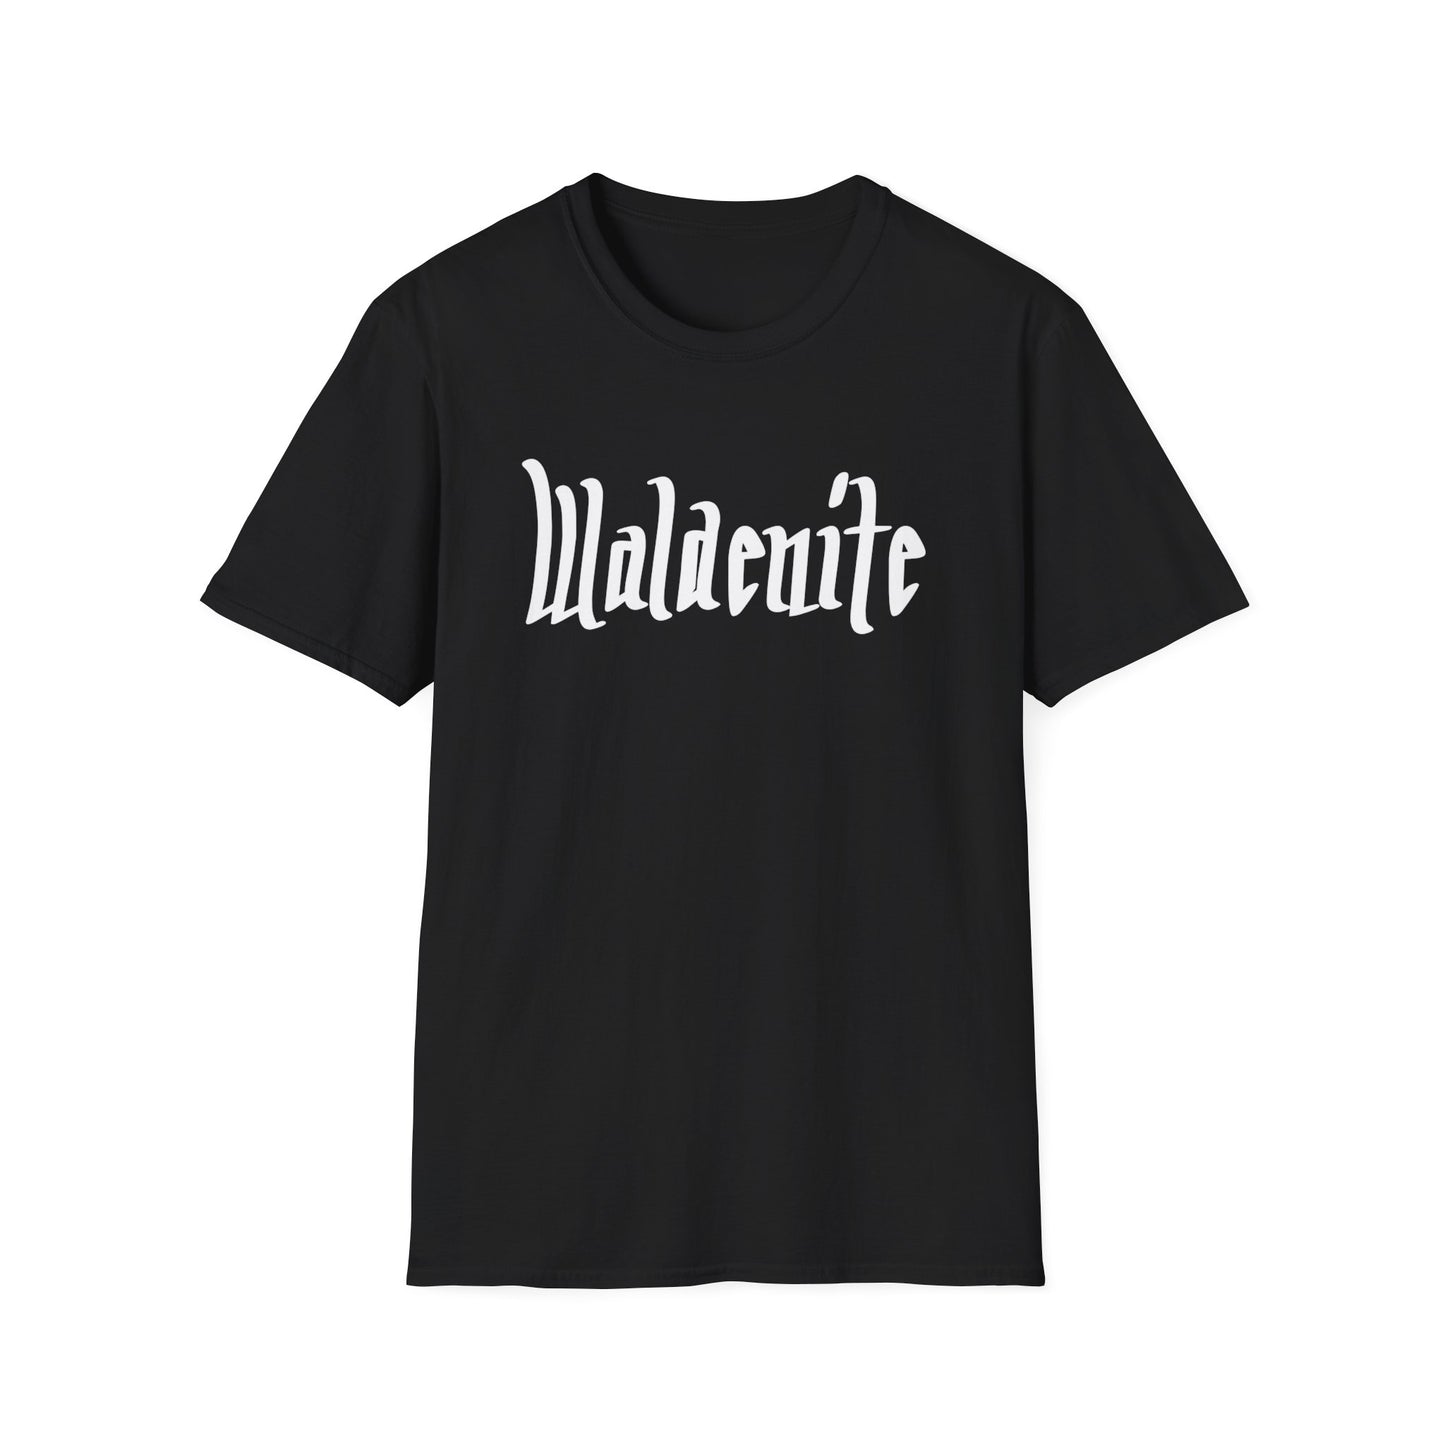 Waldenite Tee Original White Logo